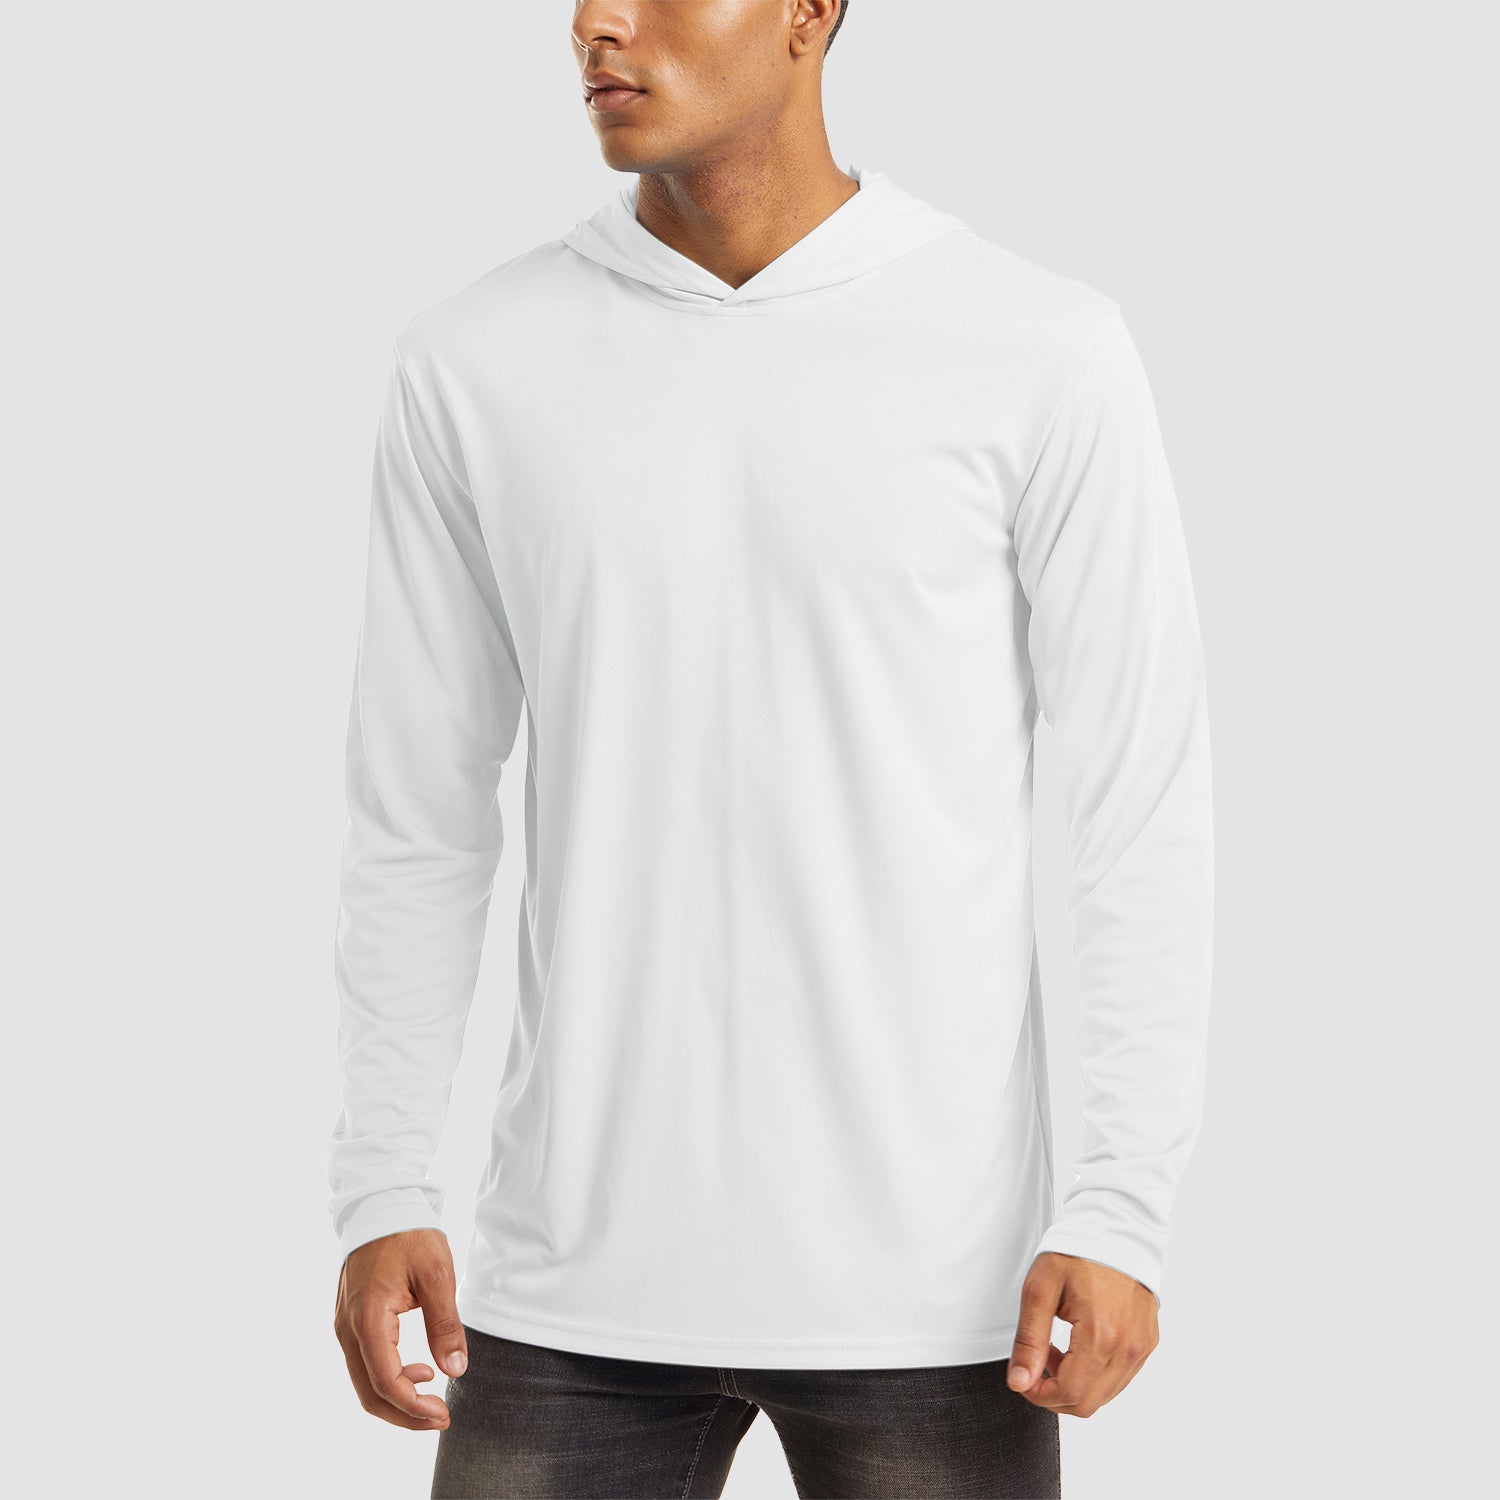 【Buy 4 Get 4th Free】Men's Long Sleeve Hooded Shirt UPF 50+ Athletic Shirts, White / XL